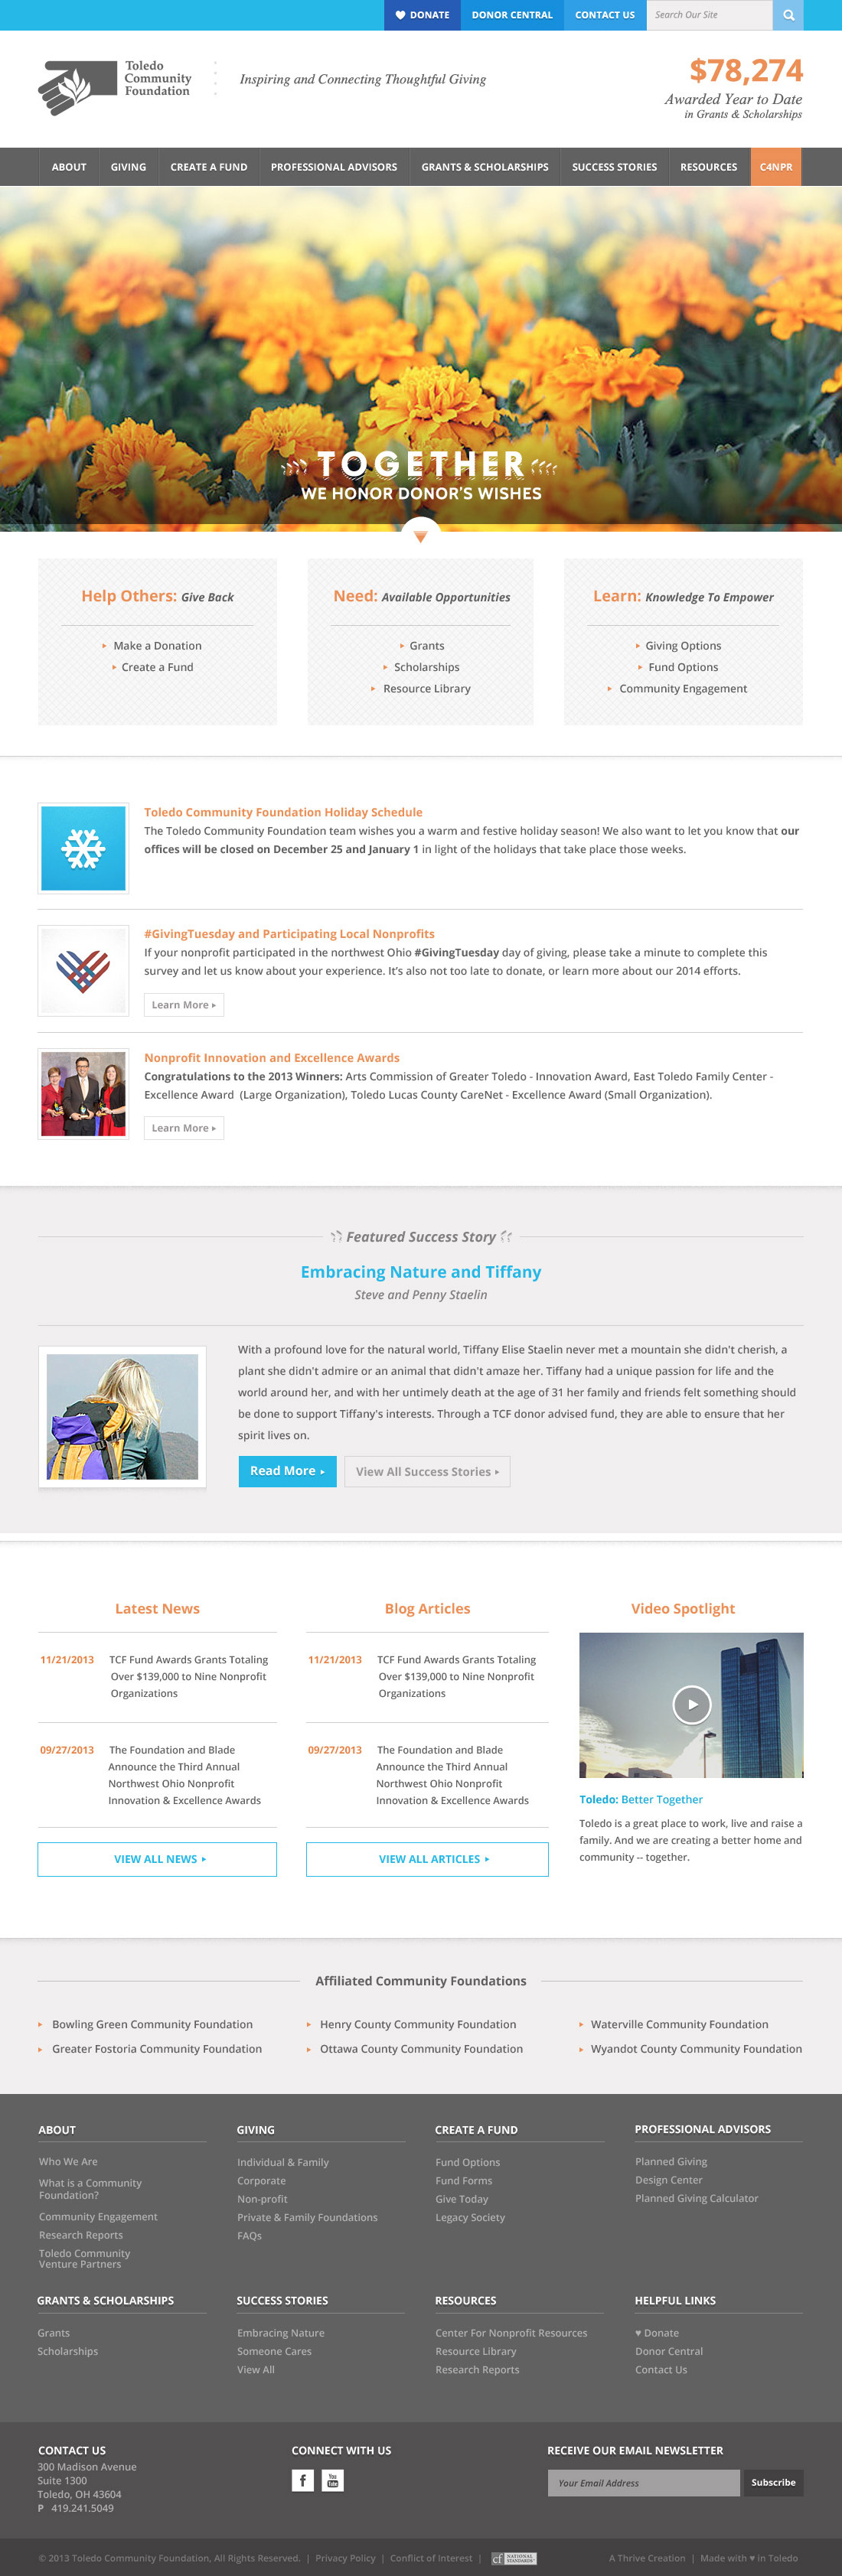 Toledo Community Foundation Homepage Design